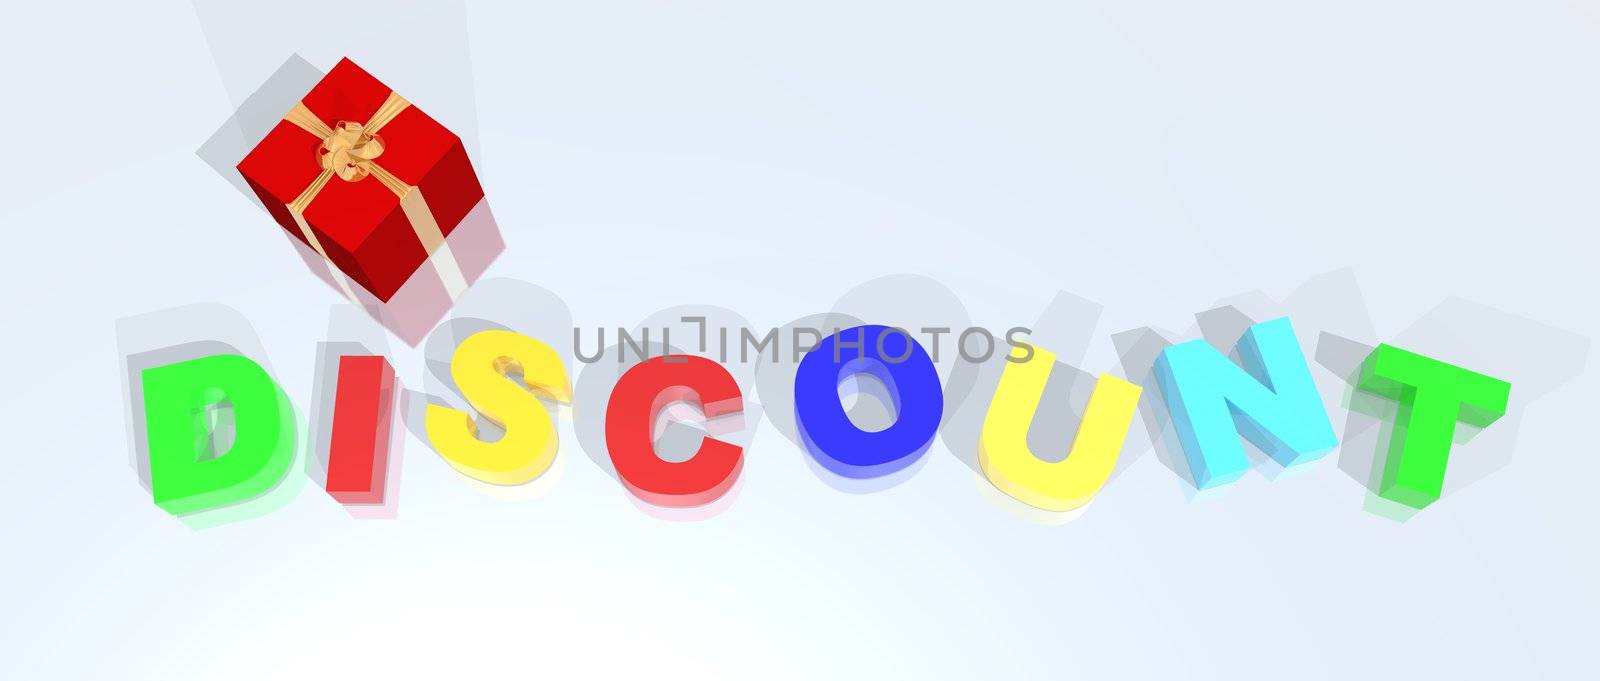 discount by jbouzou